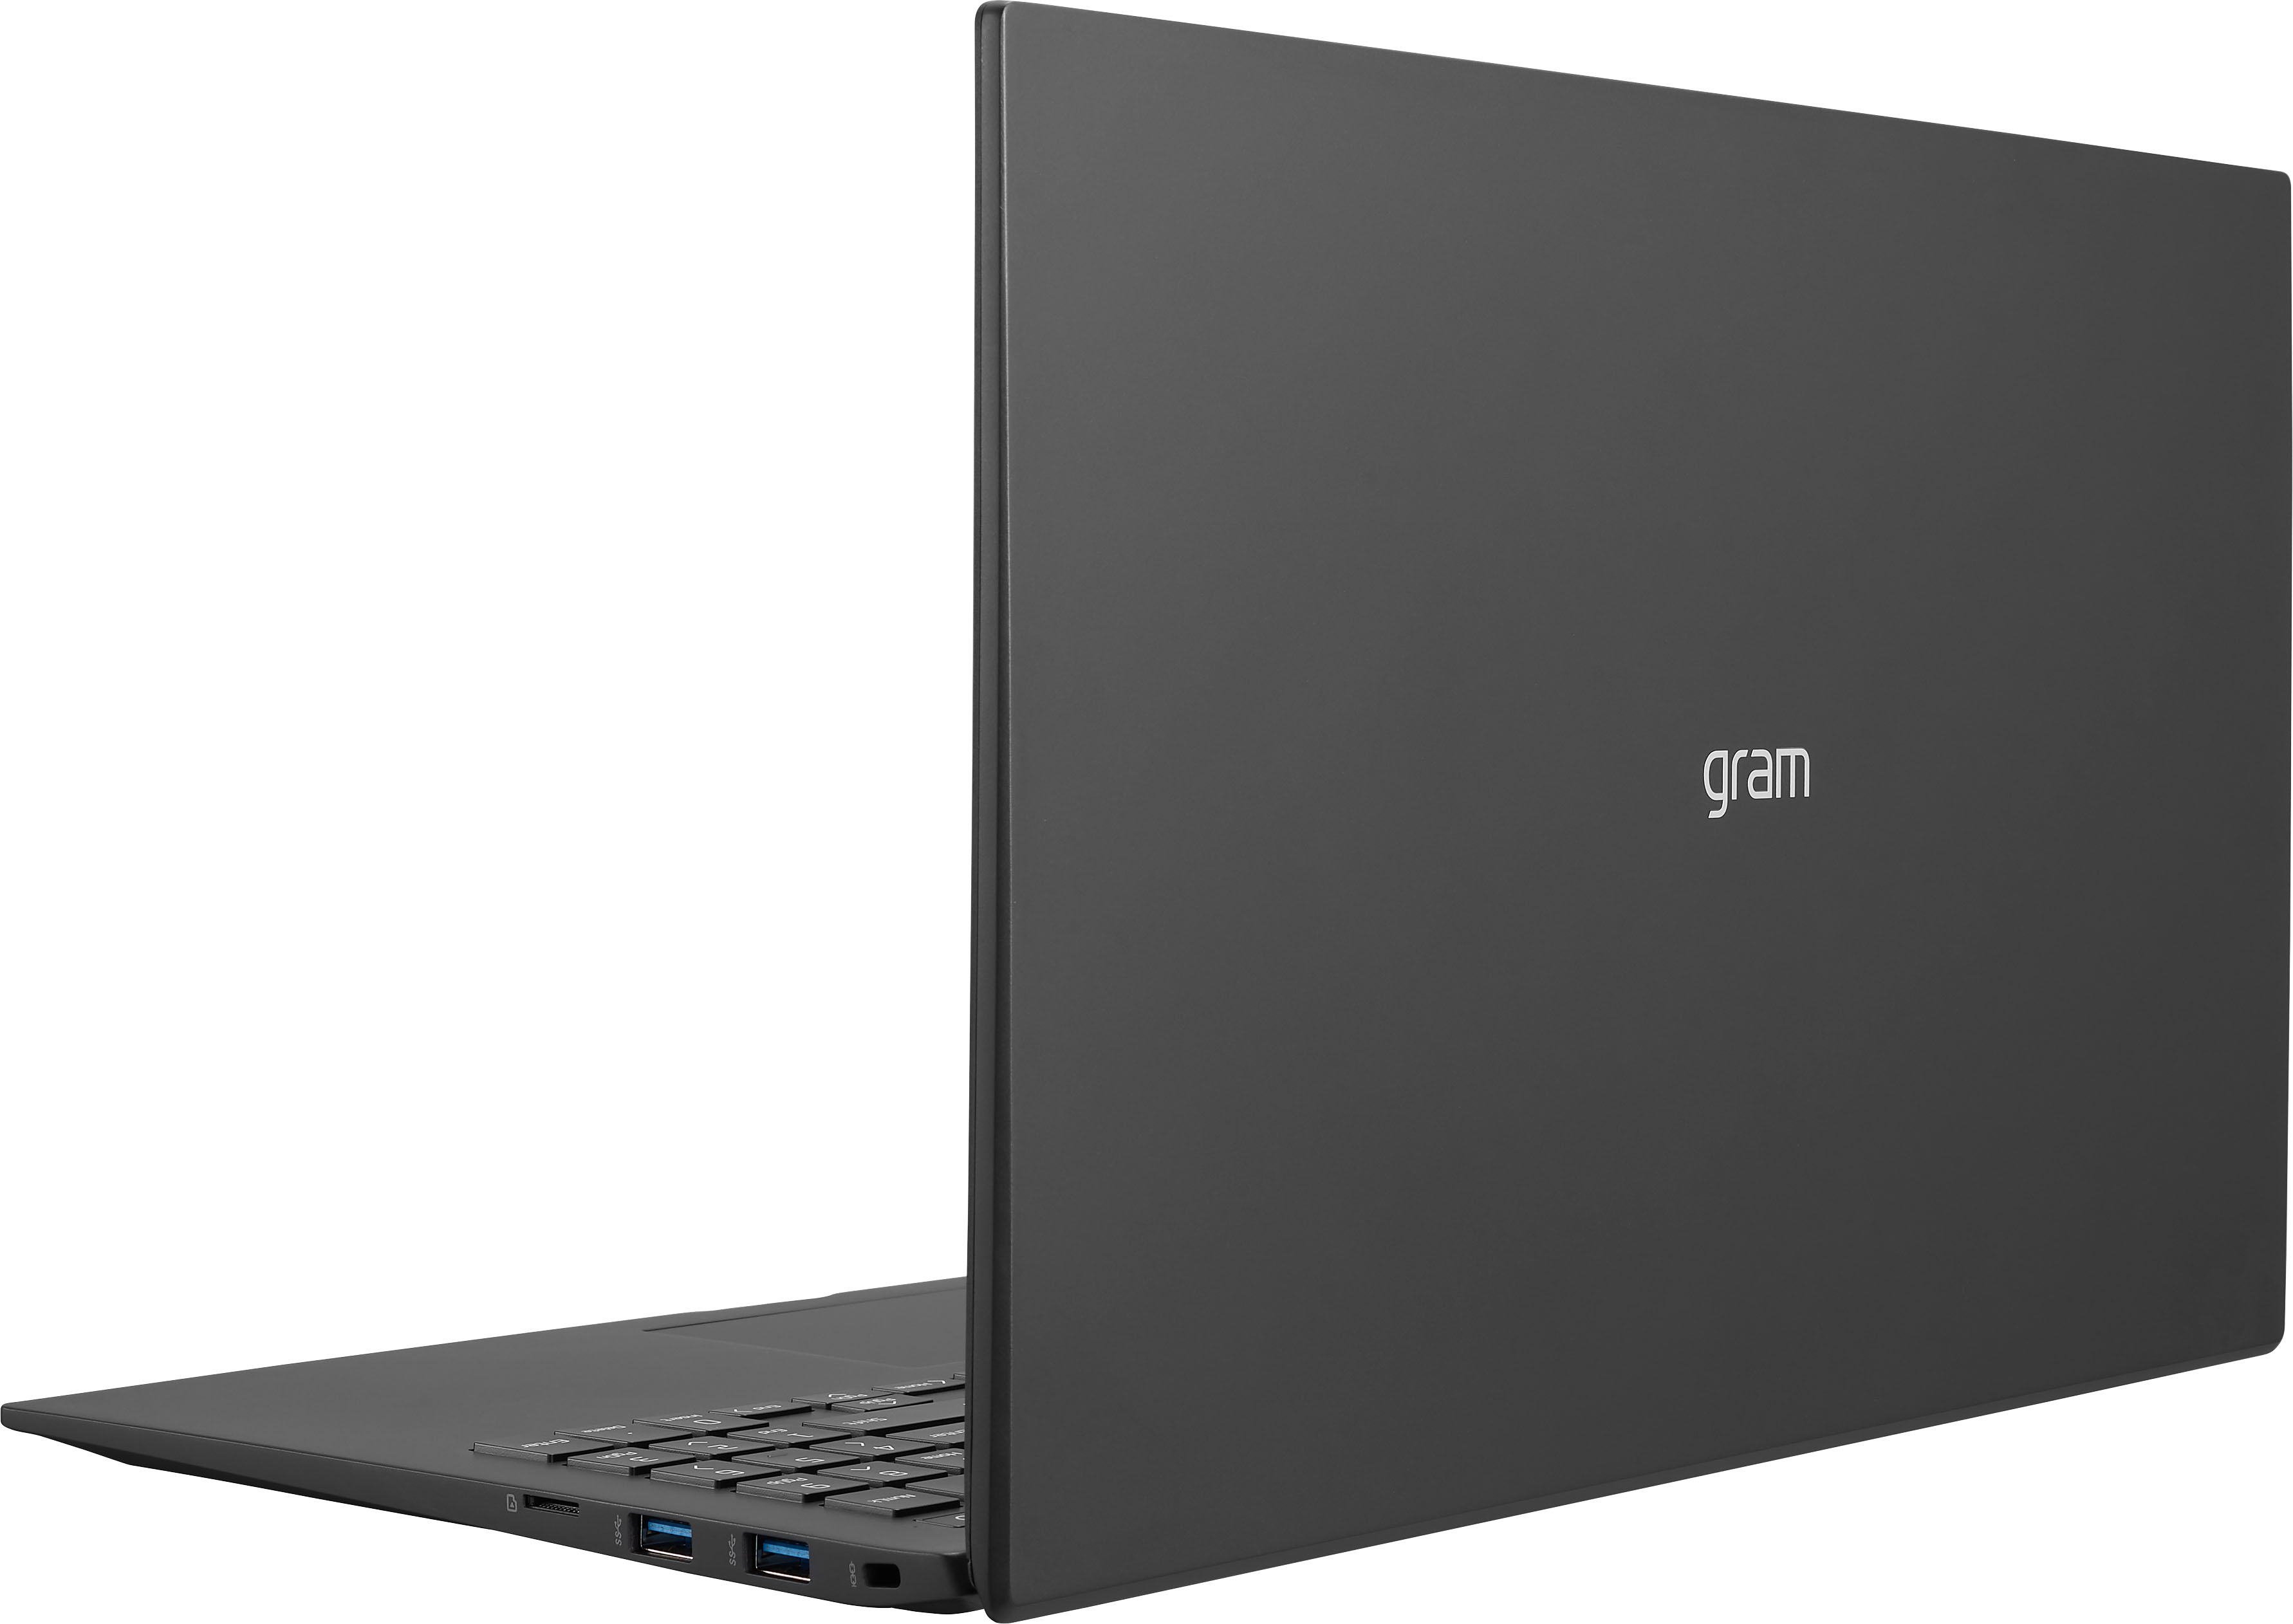 Angle View: LG - gram 15.6” Full HD IPS Laptop 11th Gen Intel Core i5 16GB RAM 512GB NVMe SSD - Black